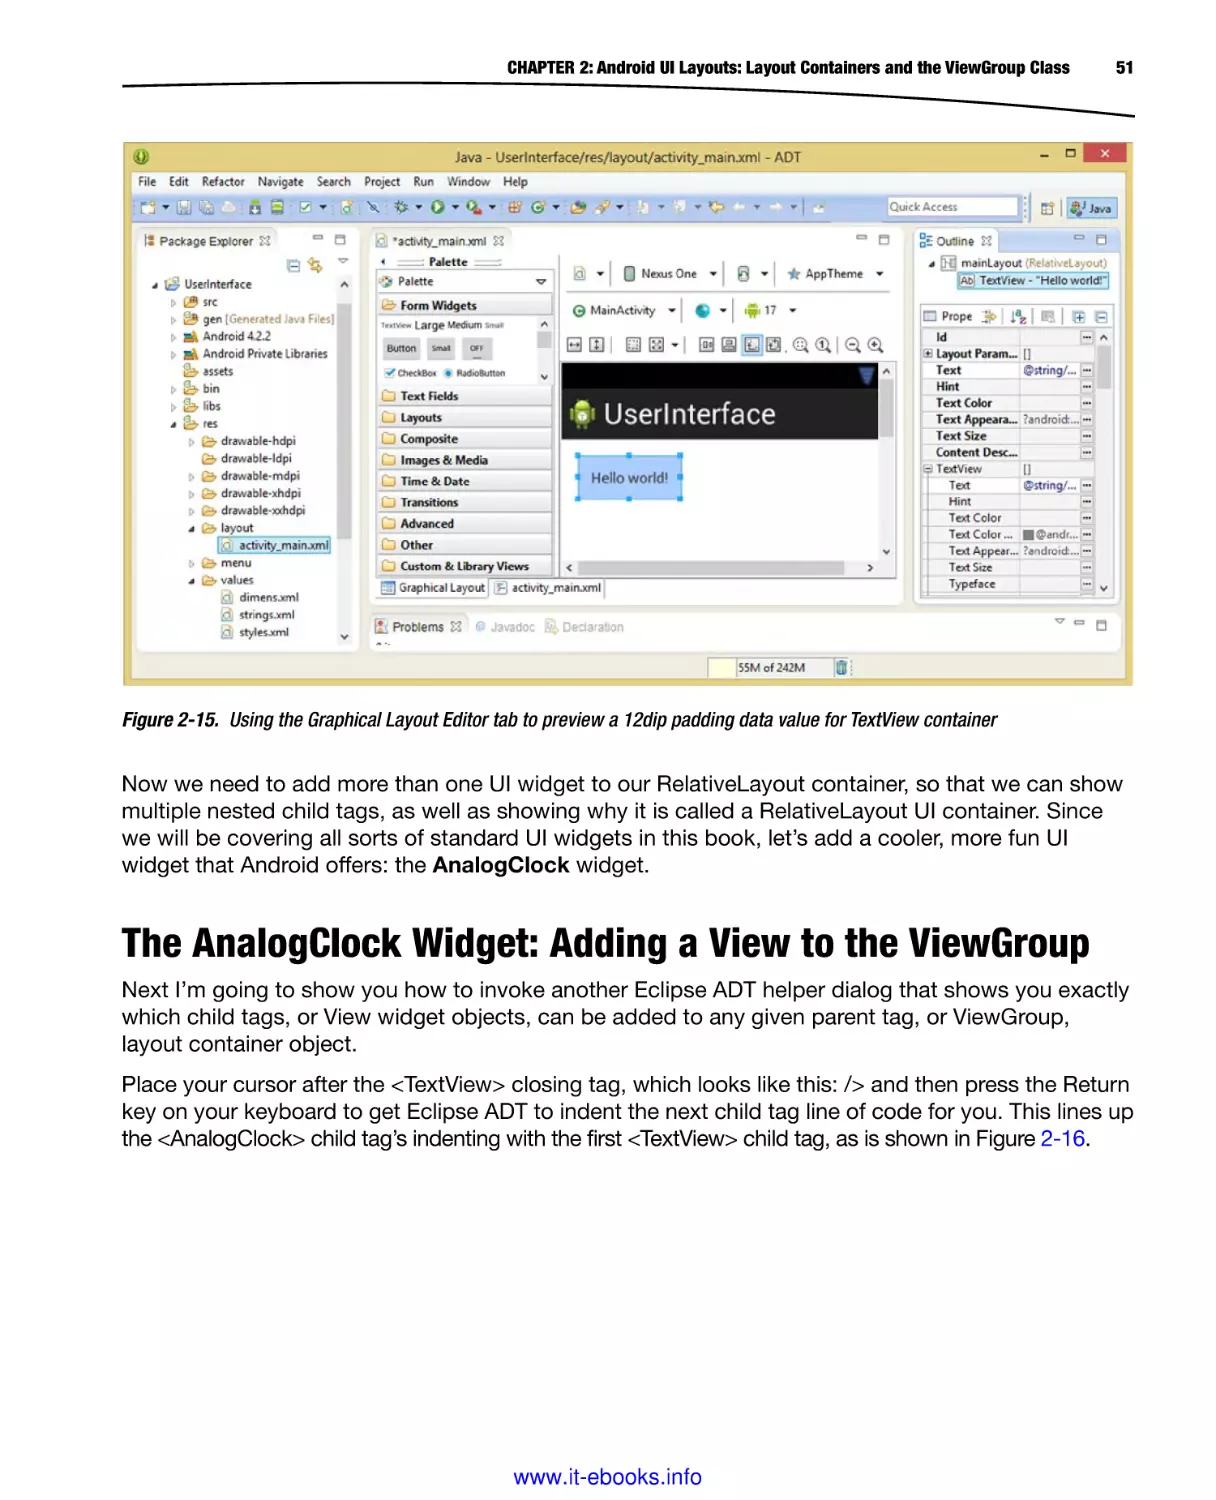 The AnalogClock Widget